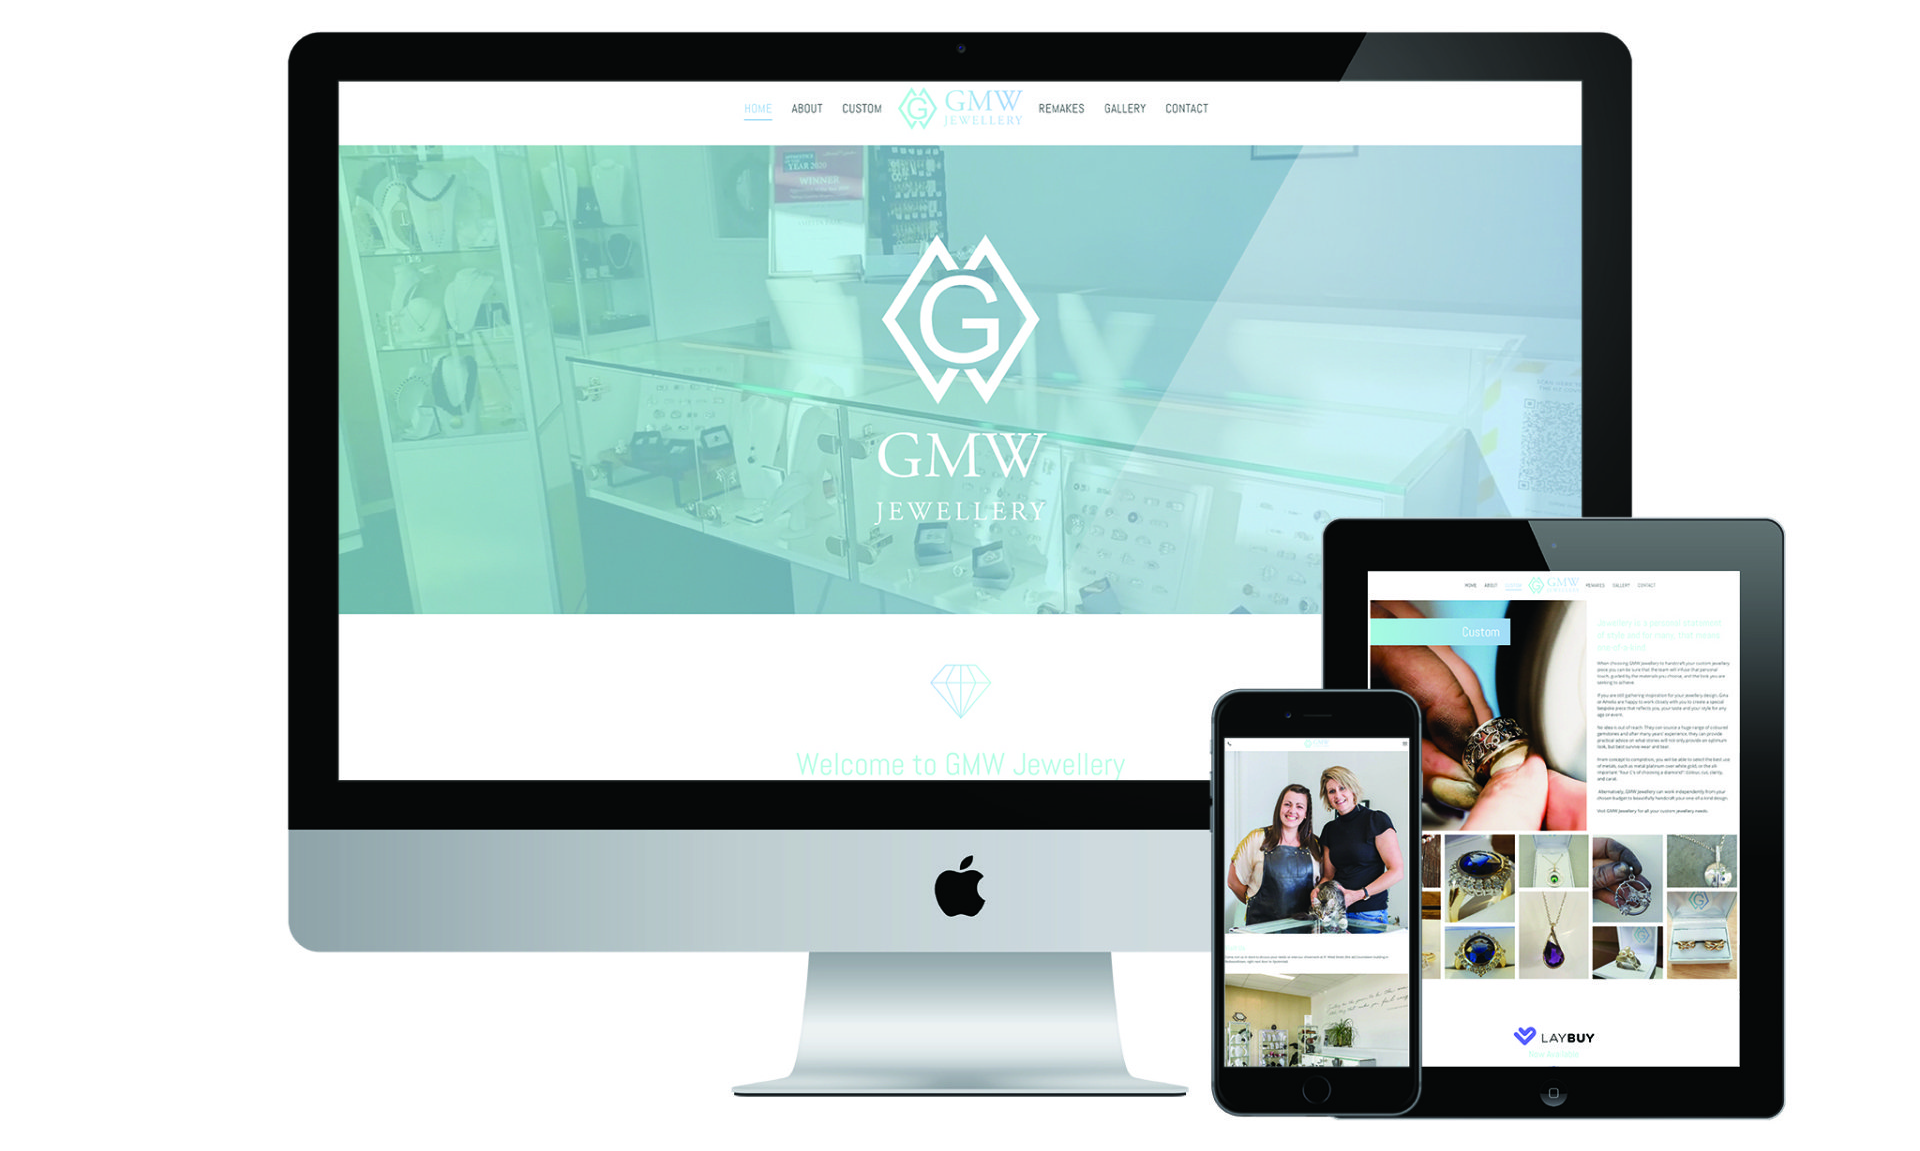 GMW Jewellery website designed by Vanilla Hayes creative graphic design  studio in Blenheim, Marlborough, New Zealand